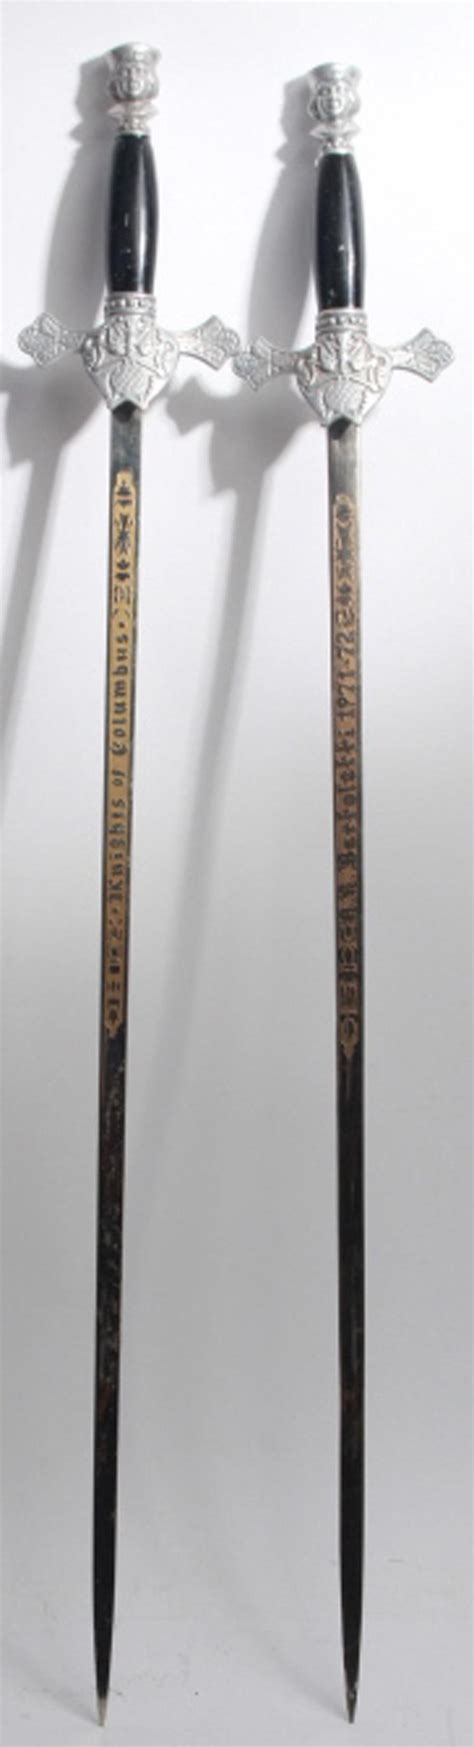 Sold Price 2 Knights Of Columbus Ceremonial Swords June 6 0119 11